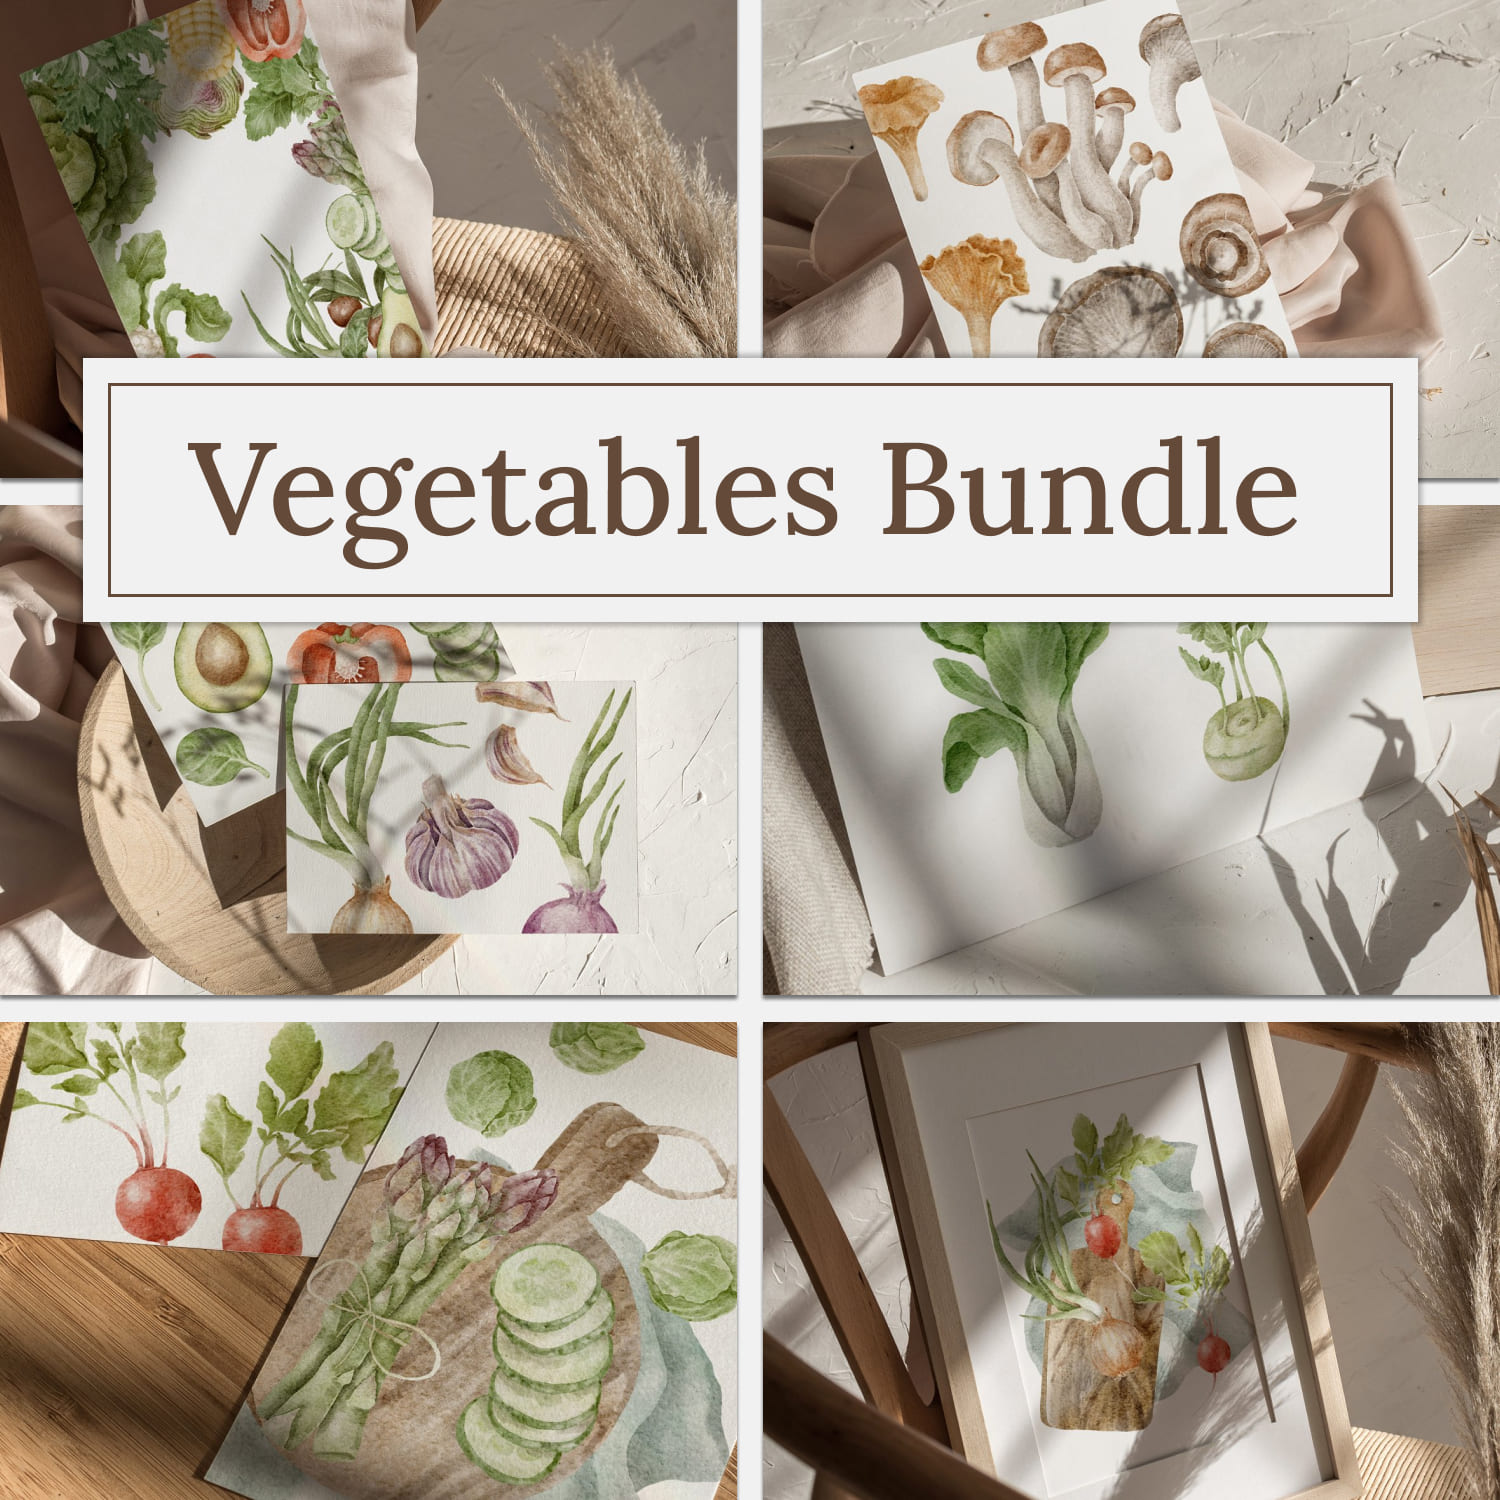 Vegetables bundle - main image preview.